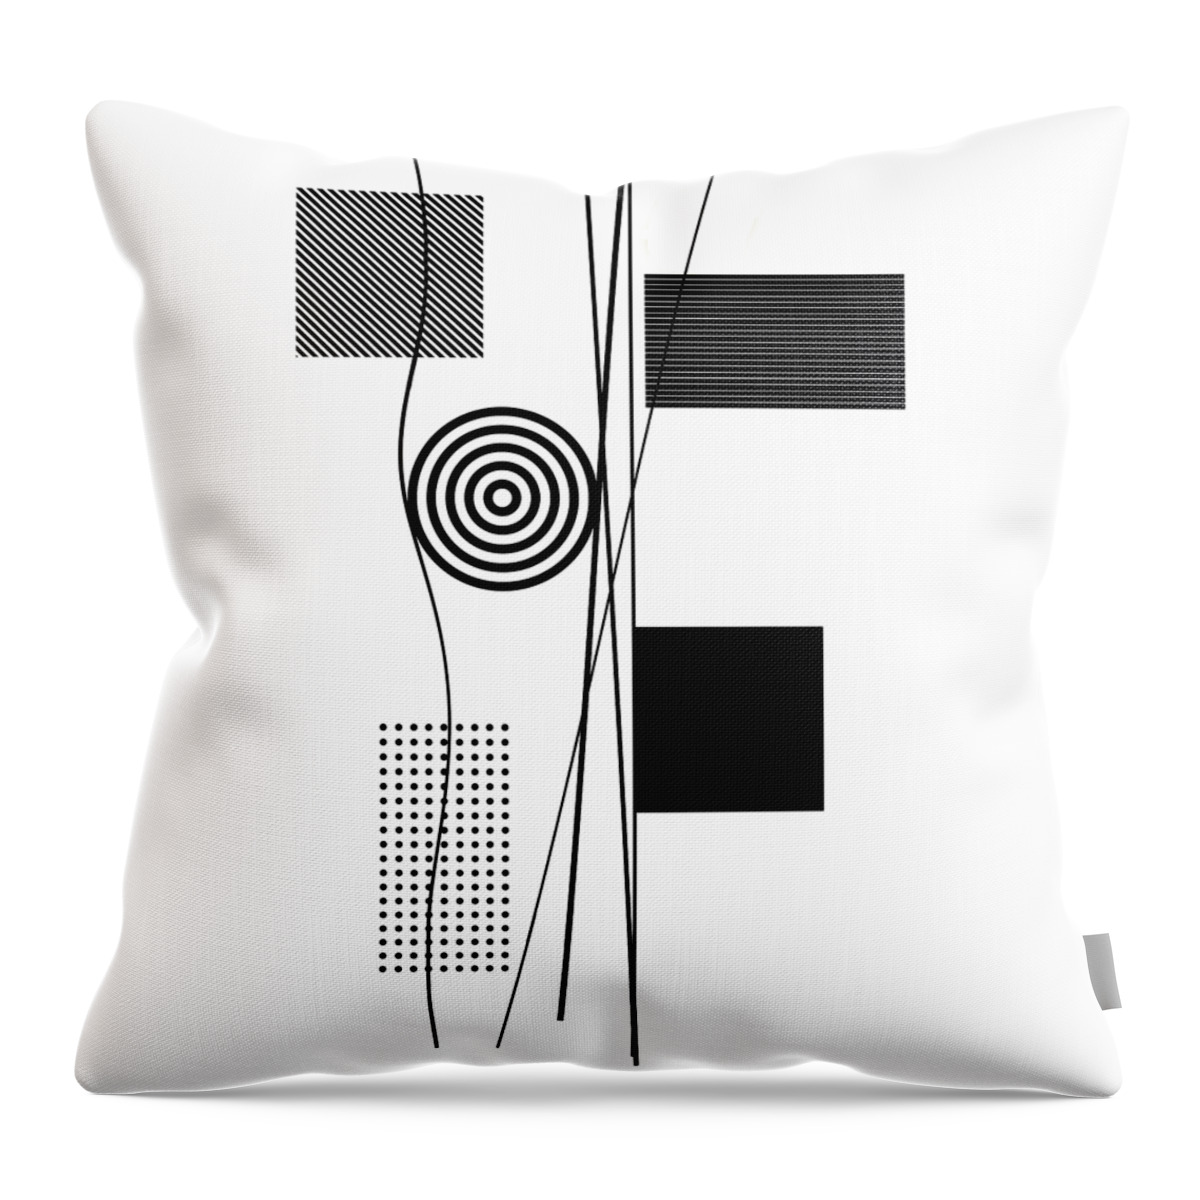 Geometry Throw Pillow featuring the digital art Geometry by Linda Lees